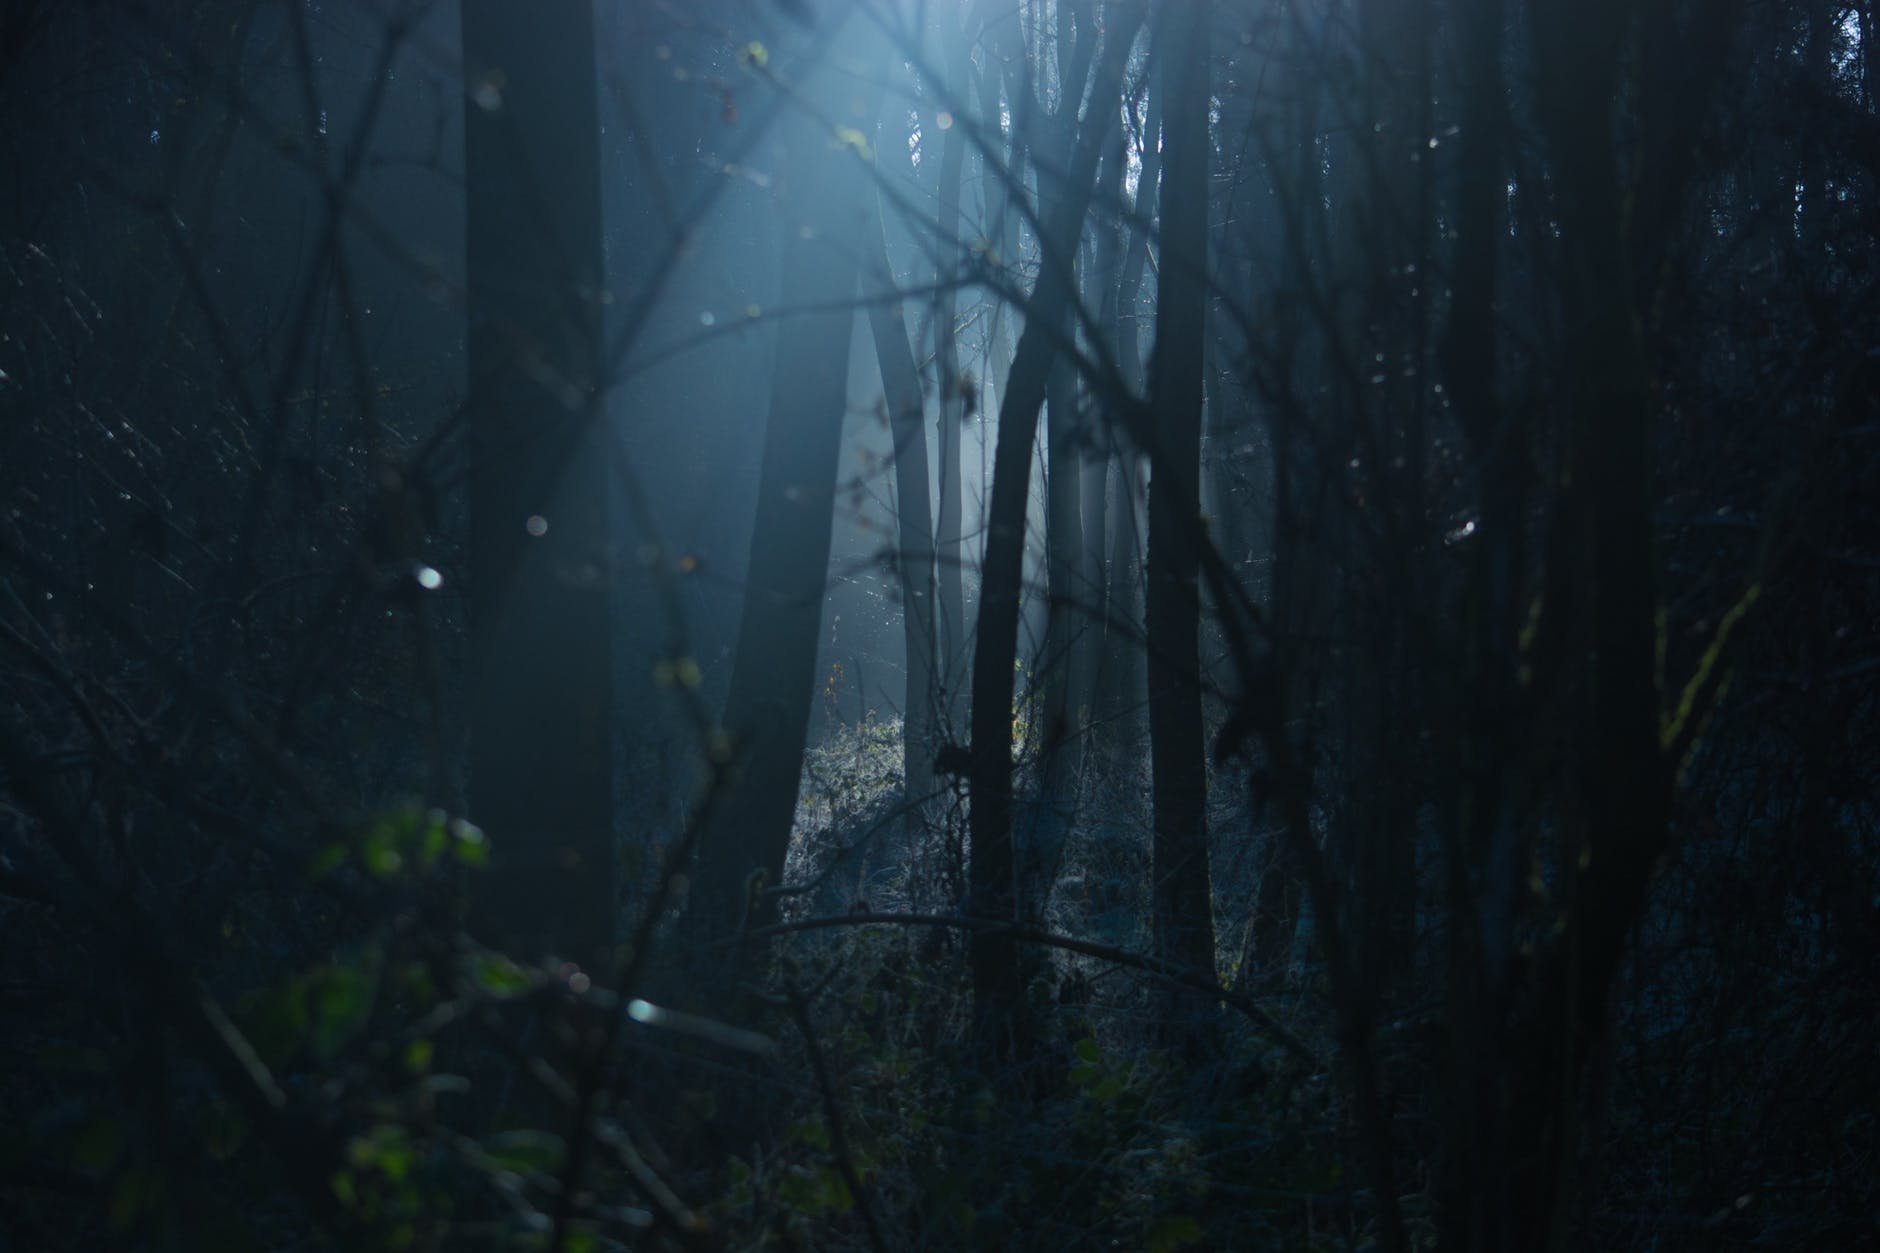 Gloomy forest scene